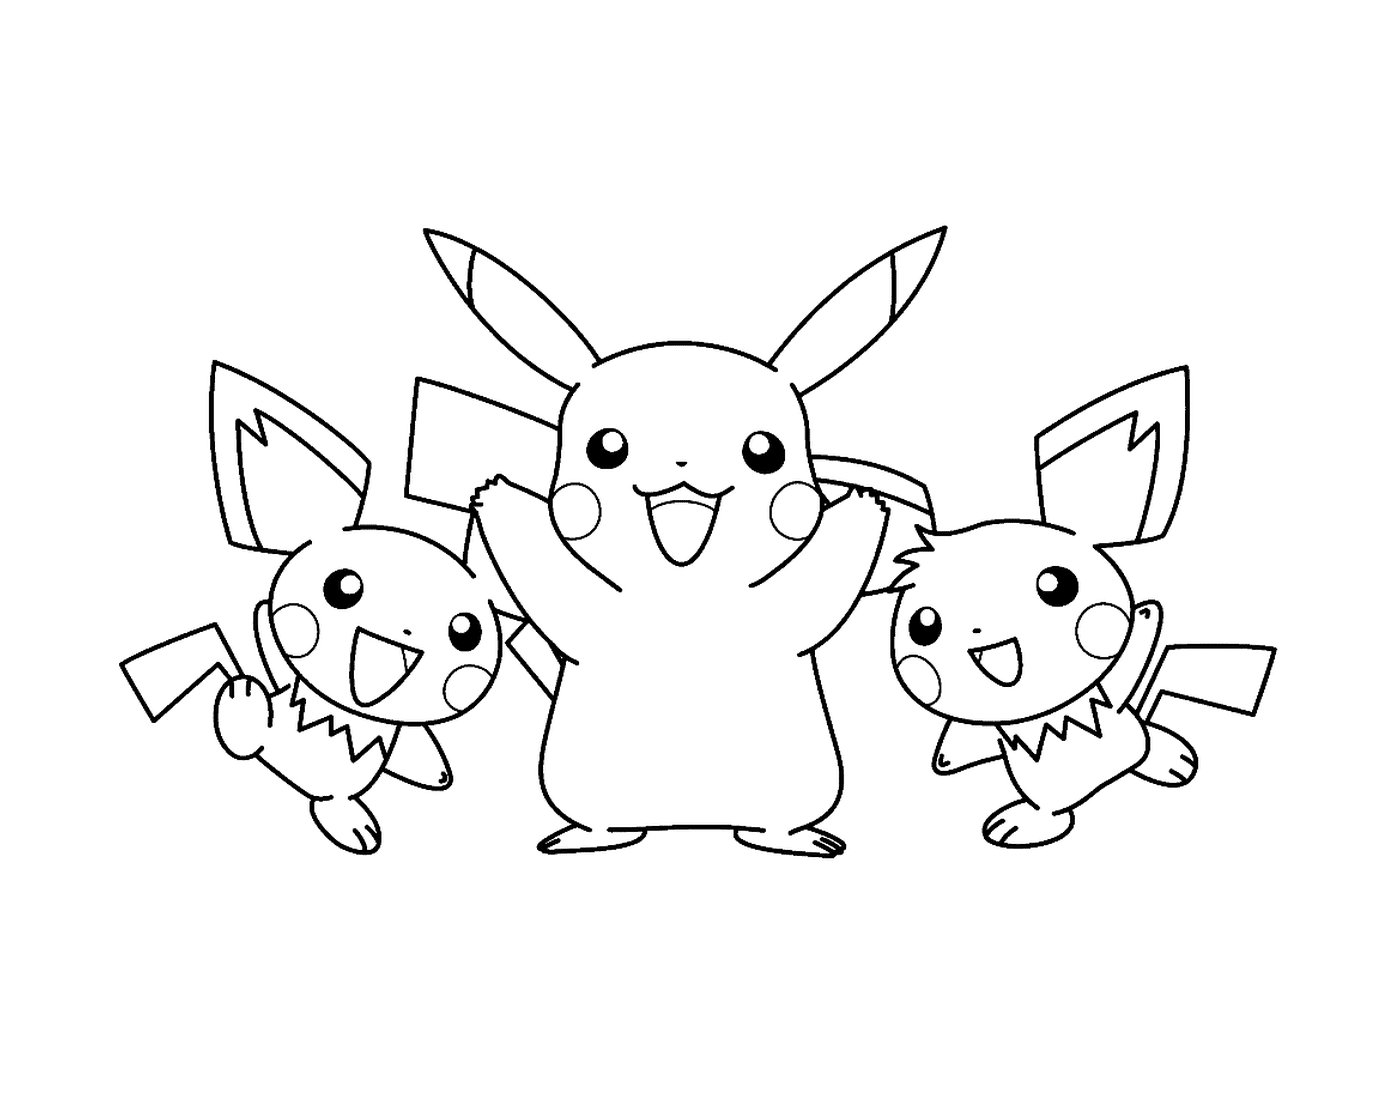  Three Pikachus for children 